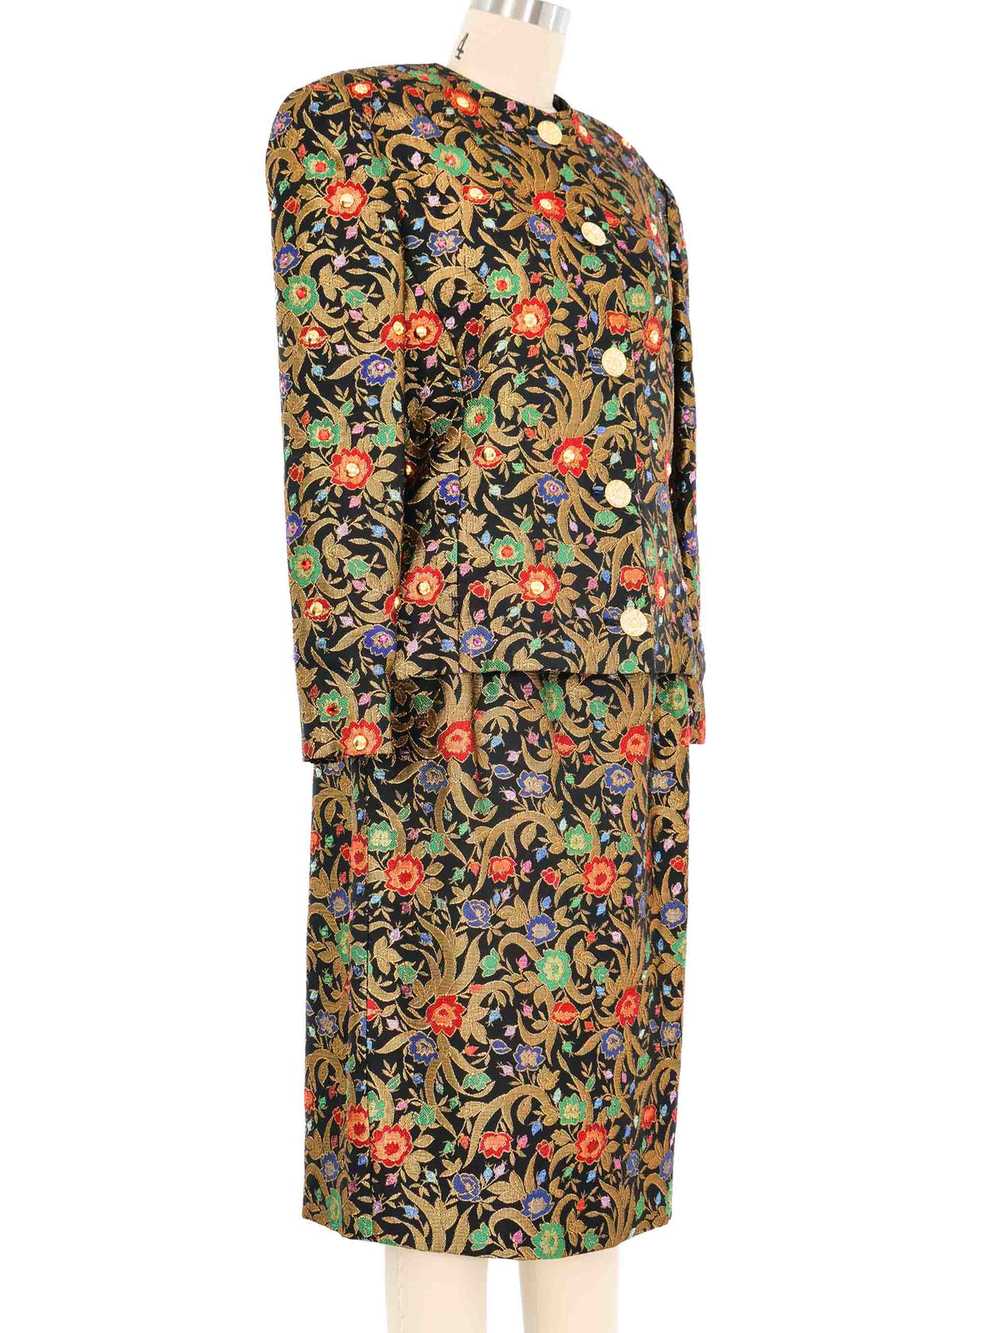 Adele Simpson Jewel Toned Brocade Suit - image 4